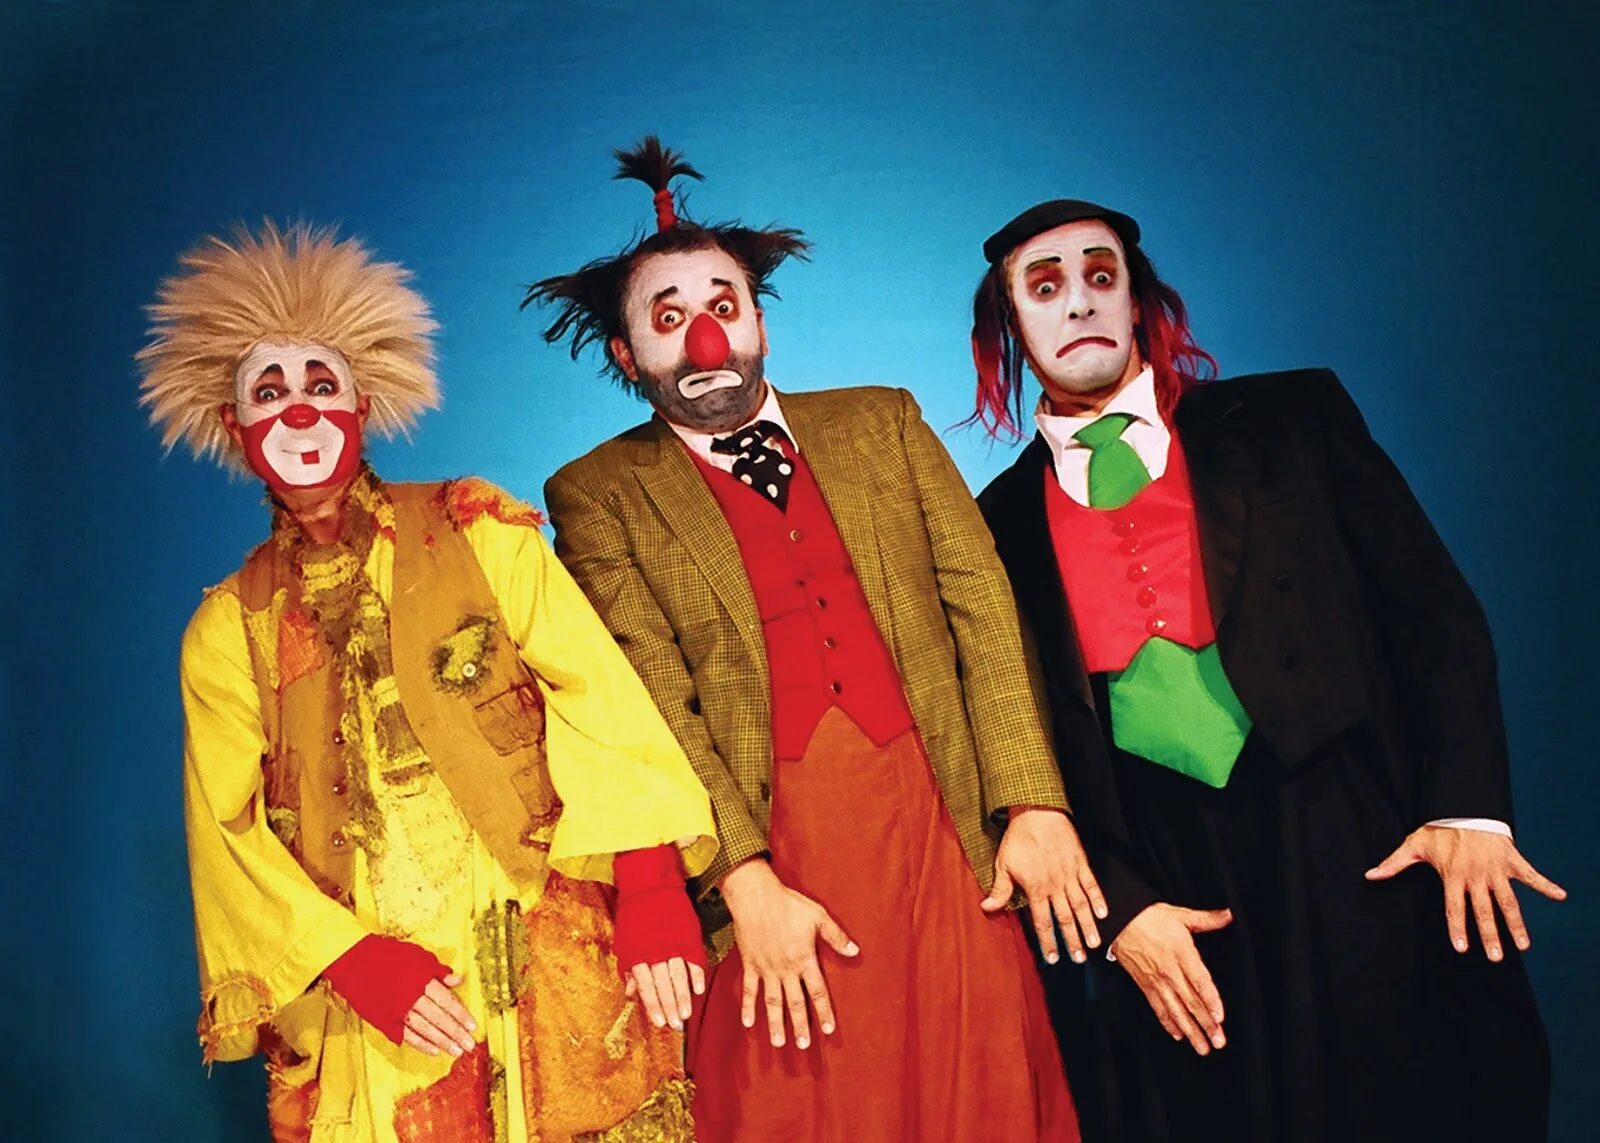 Три клоуна. Трое клоунов. Клоунский коллектив. Клоун в театре. There three clowns at the